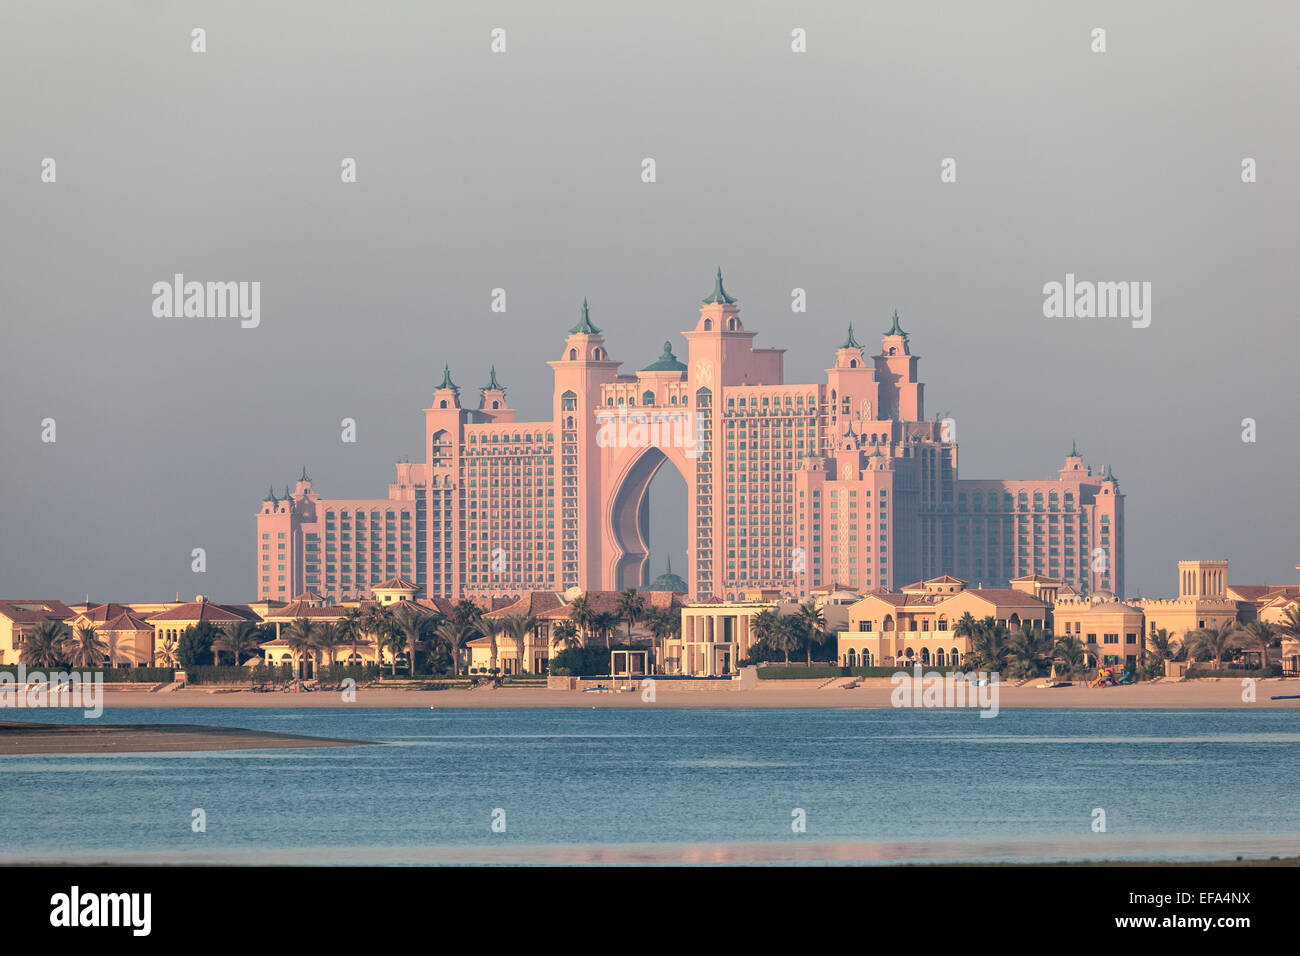 Atlantis The Palm hotel at the Palm Jumeirah in Dubai, United Arab Emirates Stock Photo